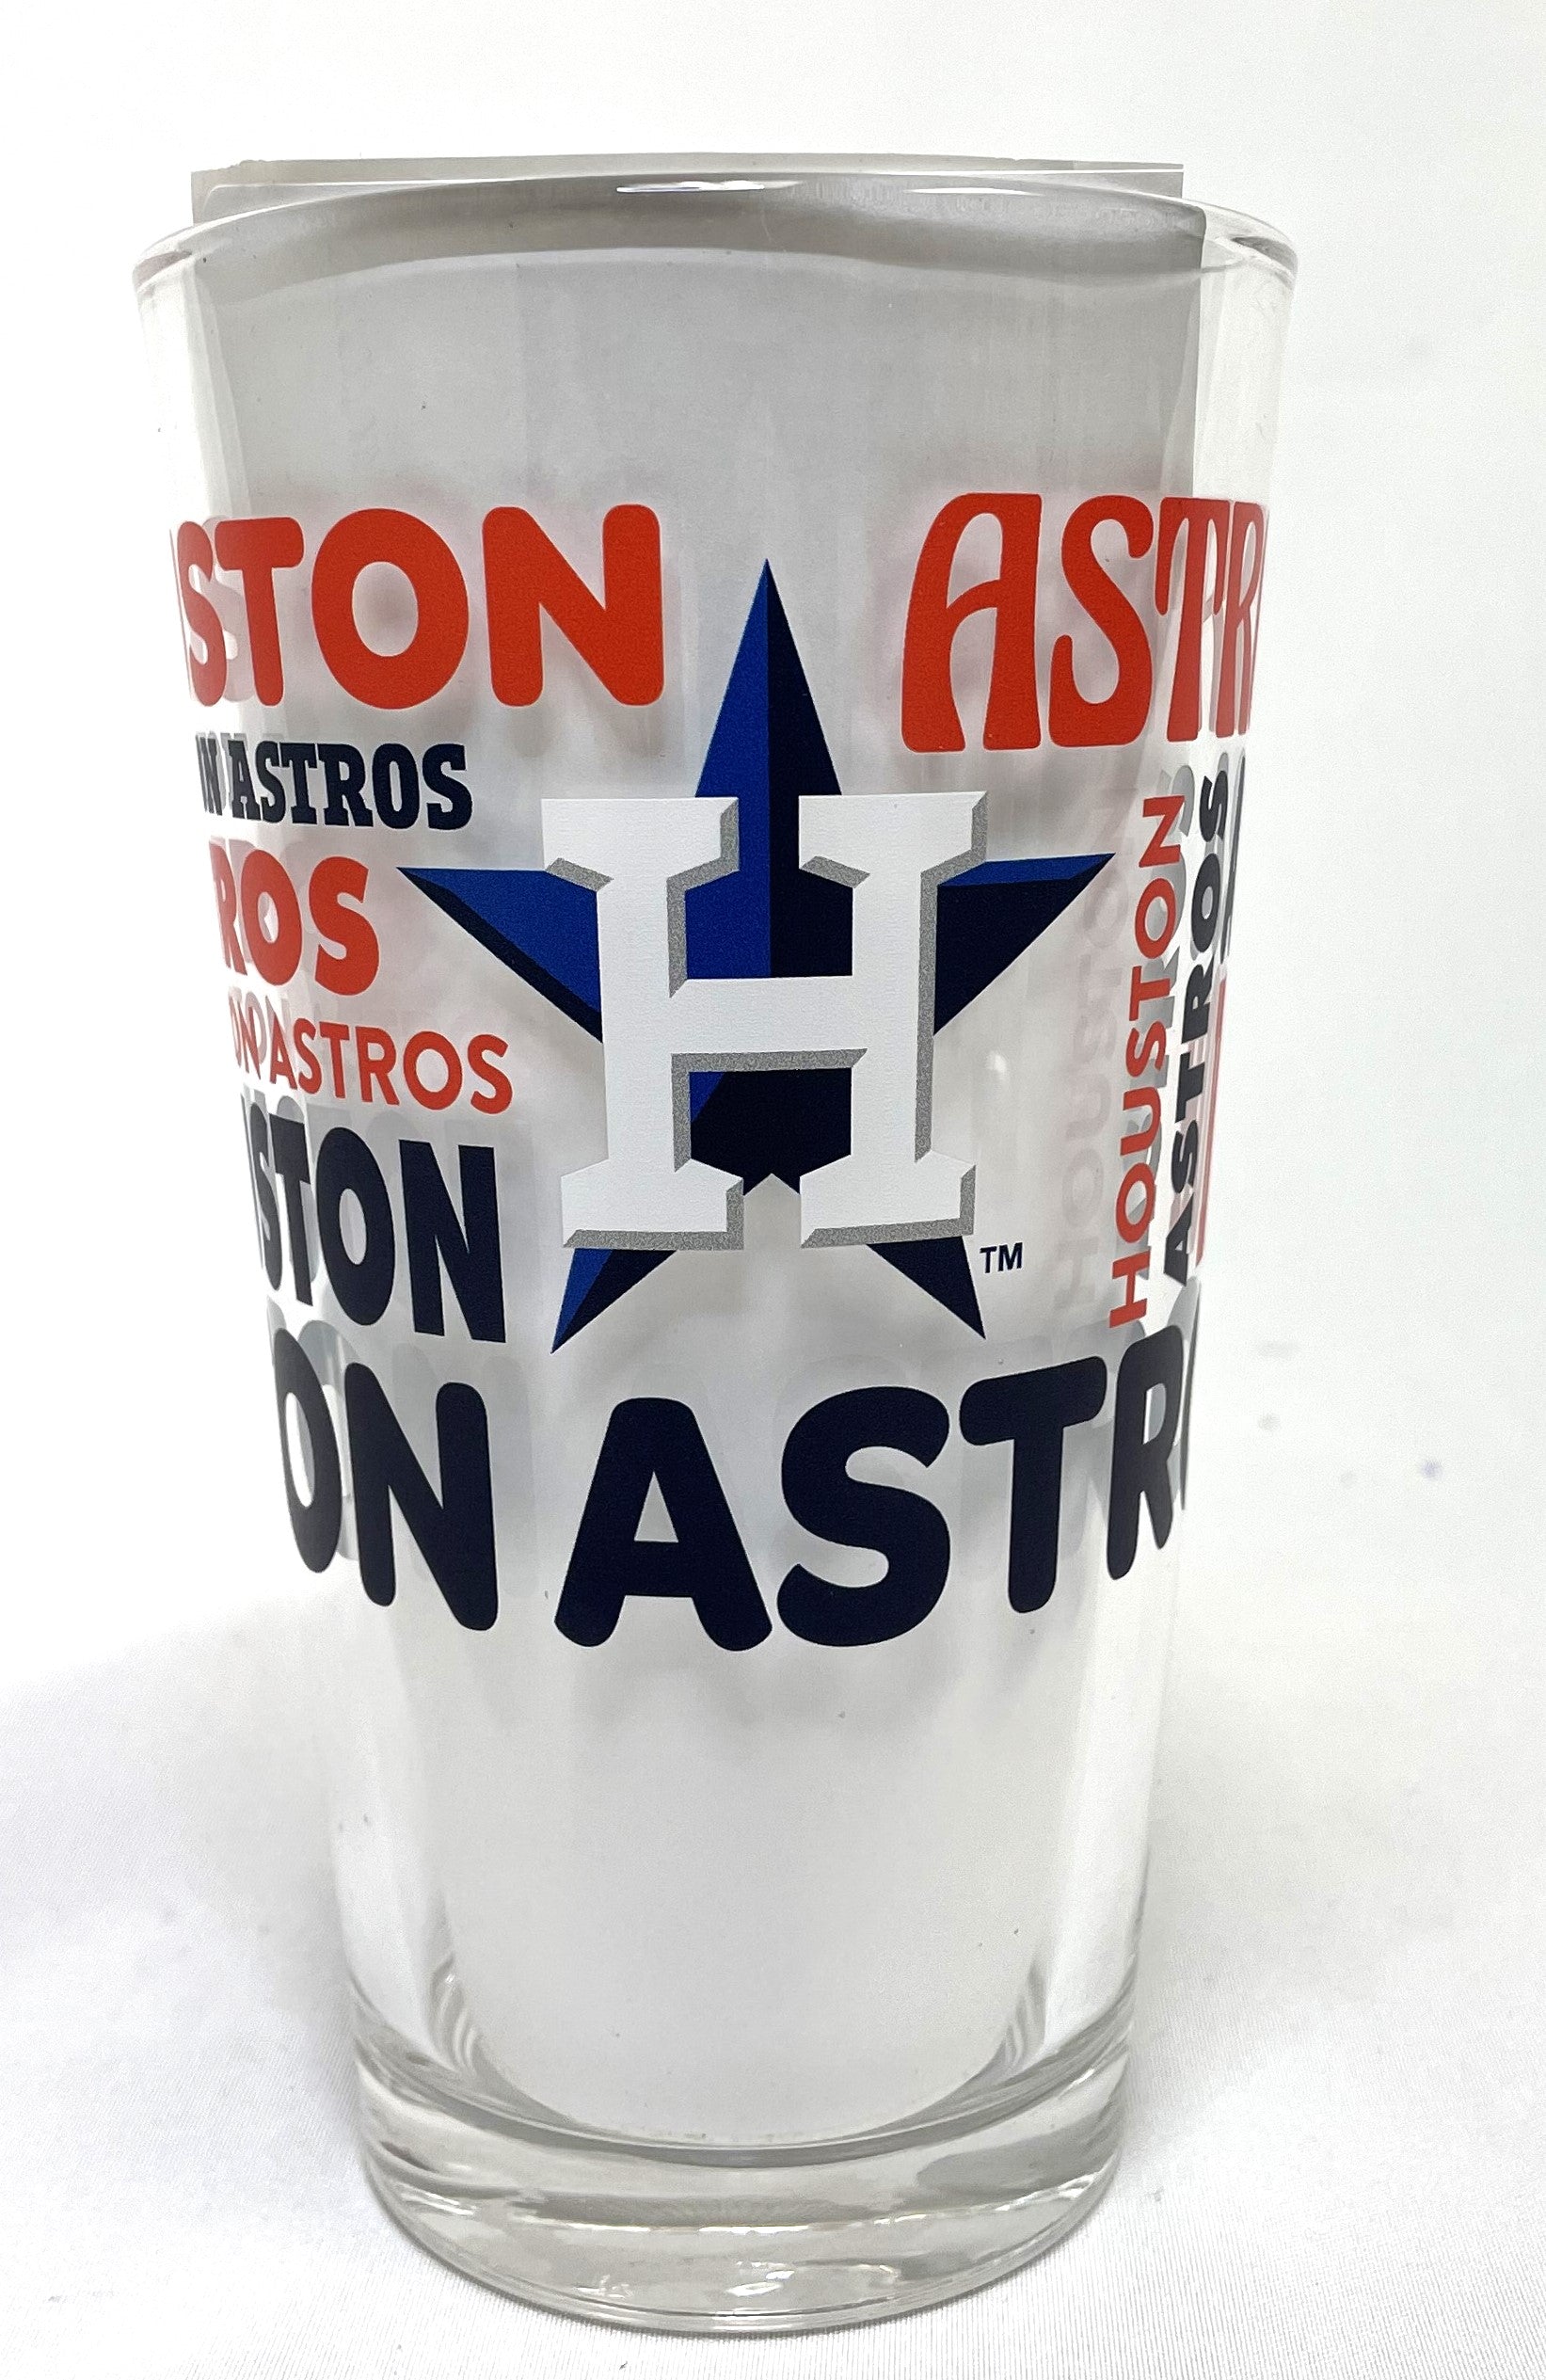 Houston Astros Spirit Pint